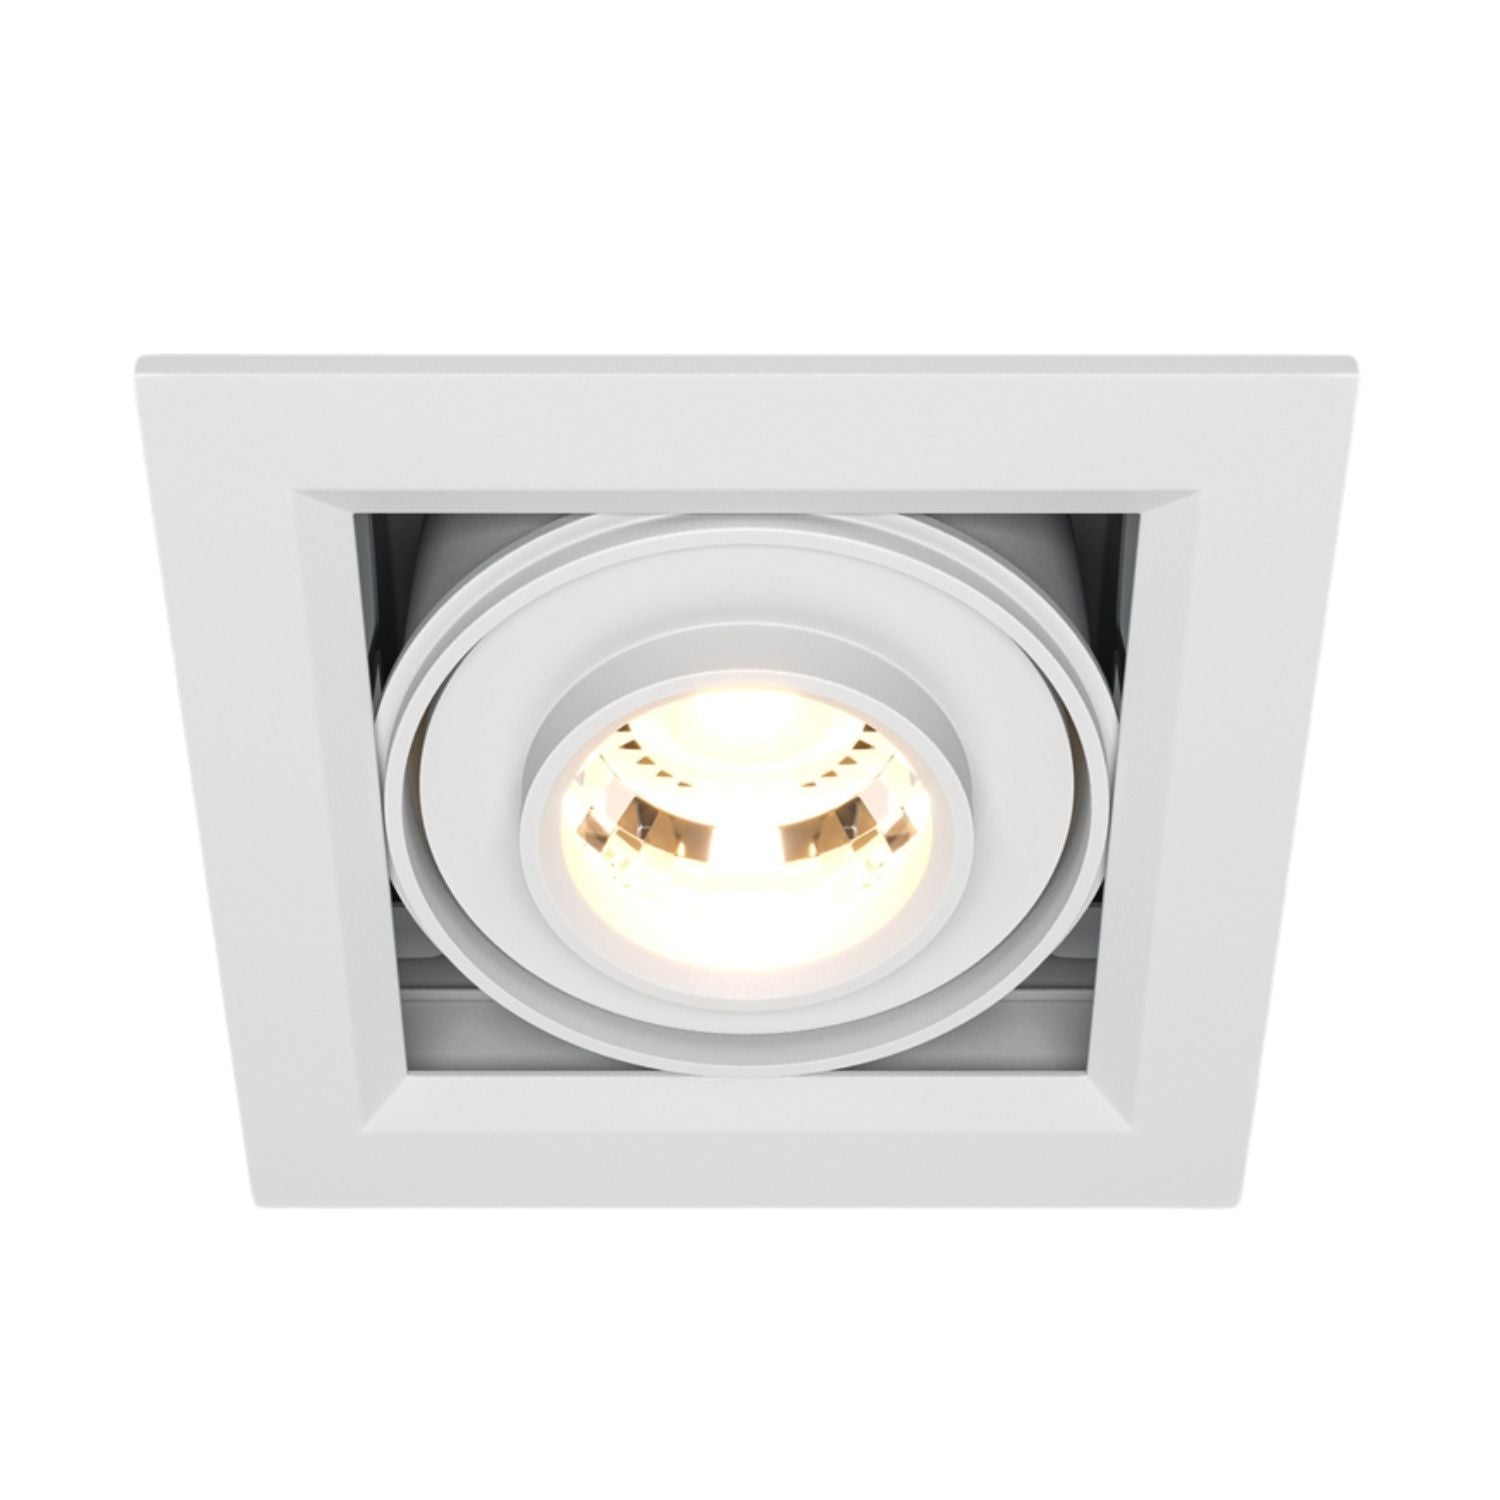 METAL MODERN - Integrated LED recessed spotlight in white or black aluminum